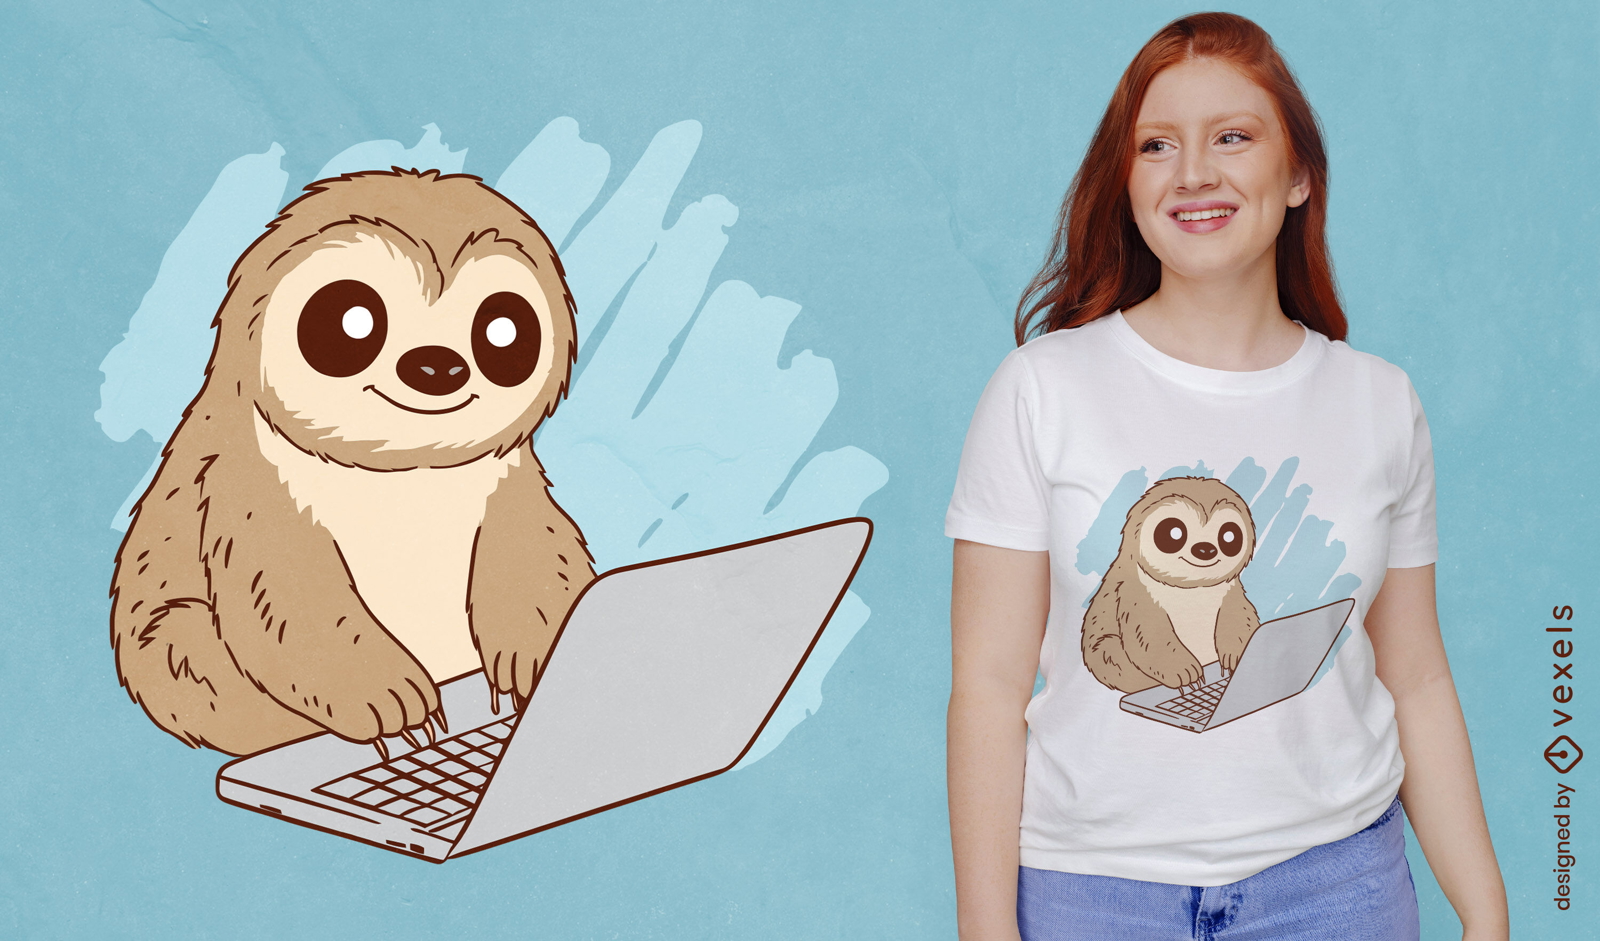 Sloth using computer t-shirt design